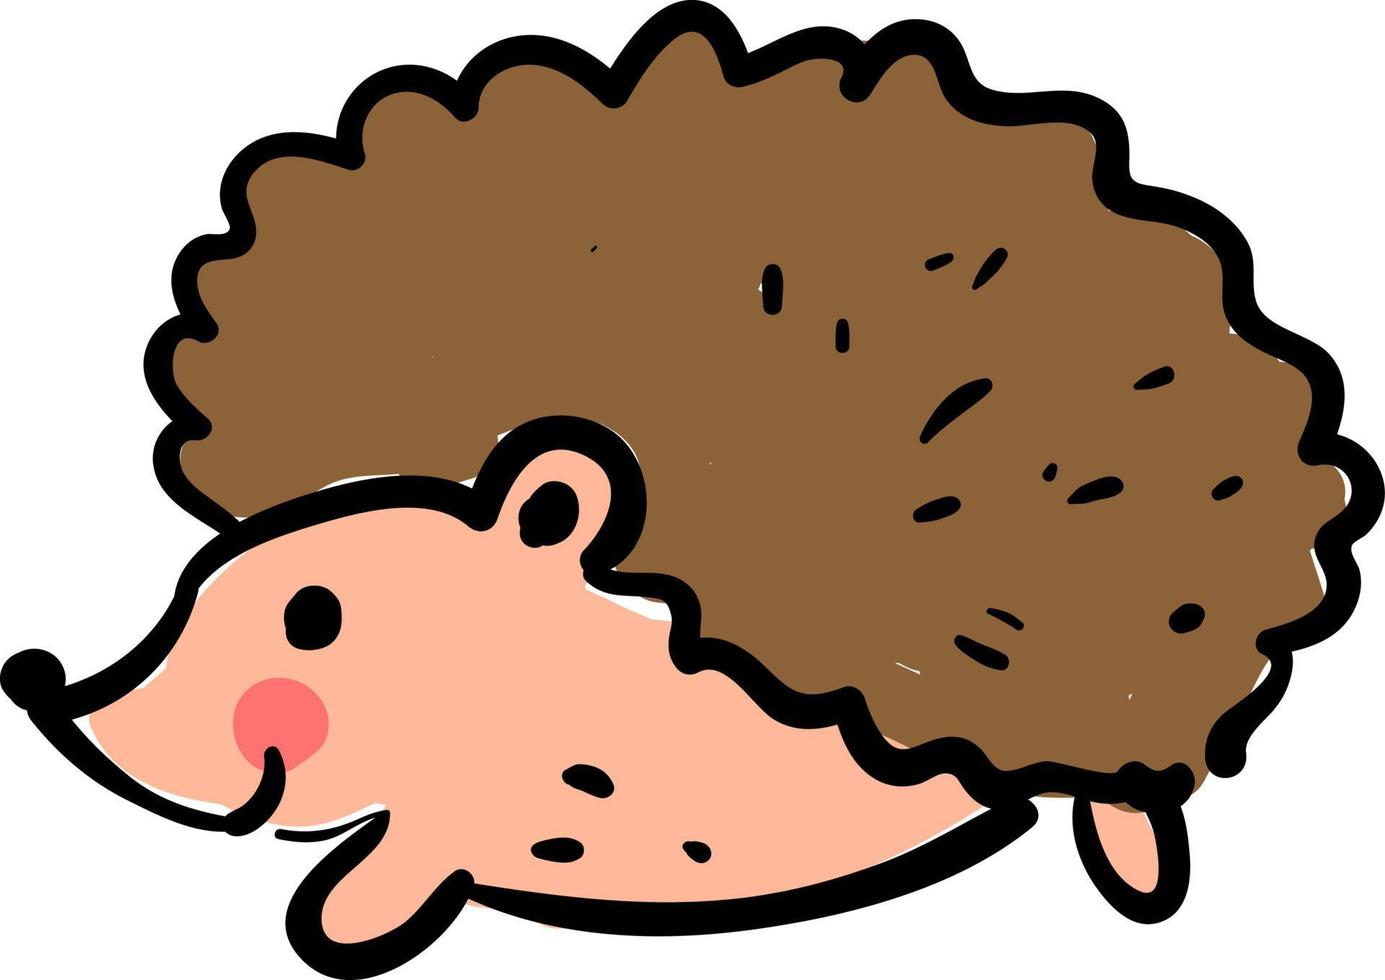 Happy hedgehog, illustration, vector on white background.